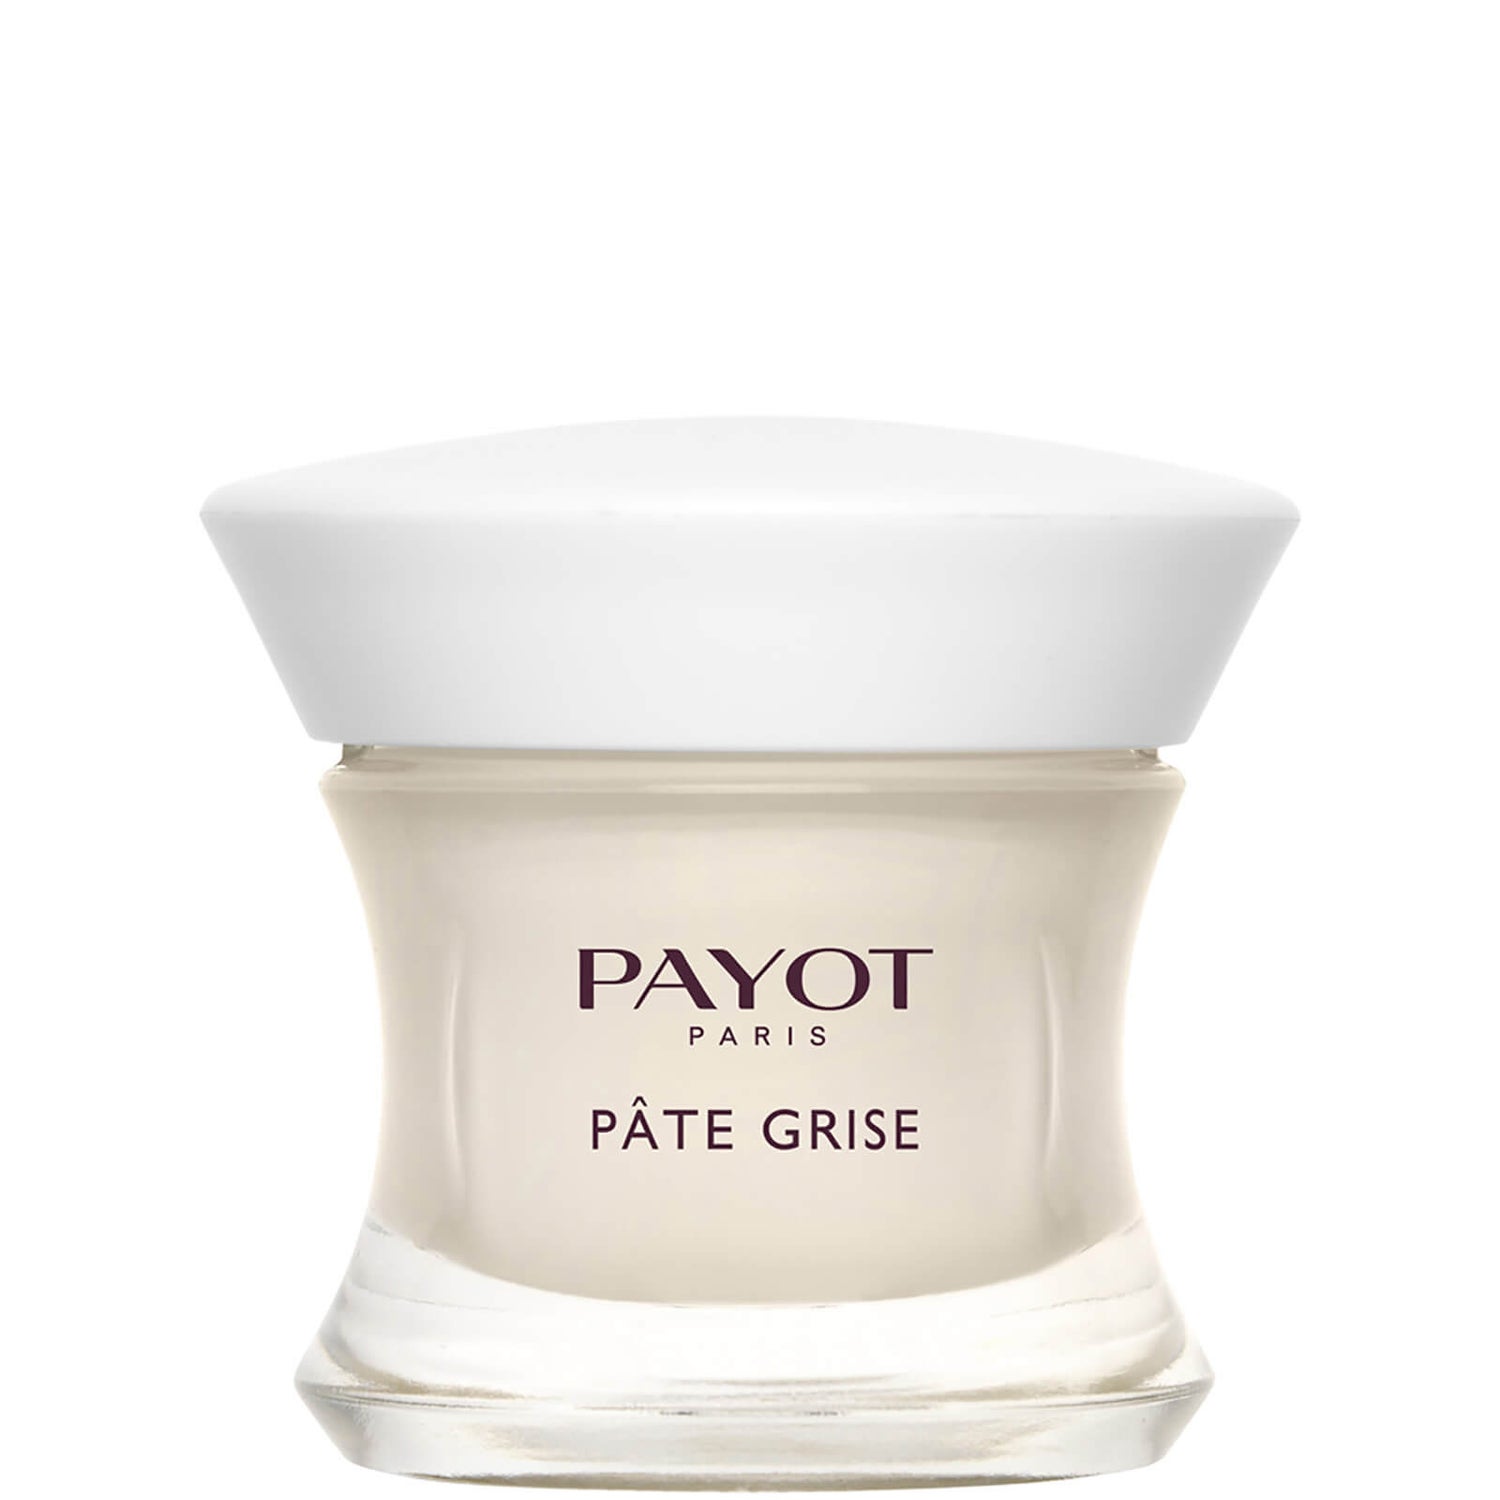 Payot Paris Pate Grise - Overnight Spot Treatment